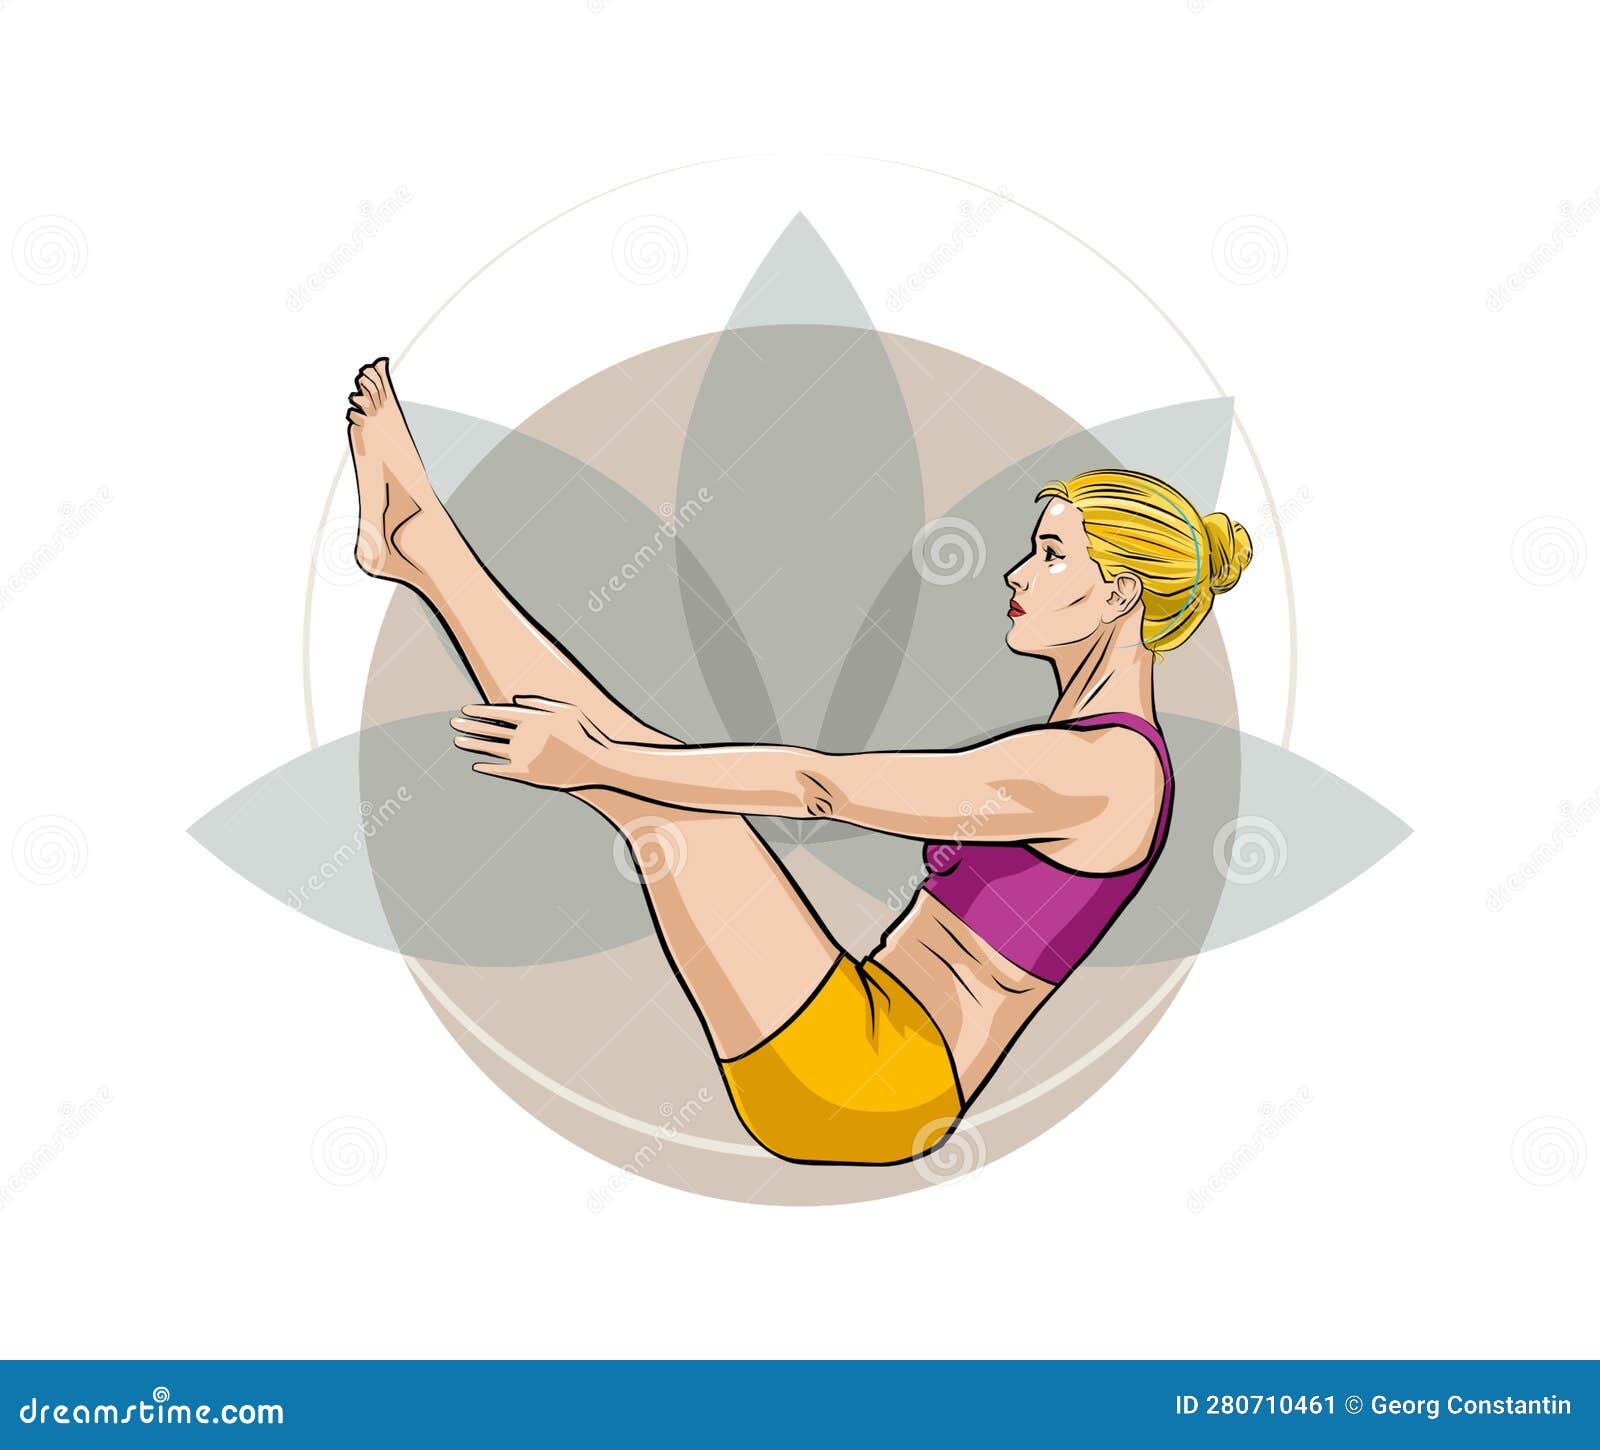 Naukasana {Boat Pose}-Steps And Benefits - Sarvyoga | Yoga